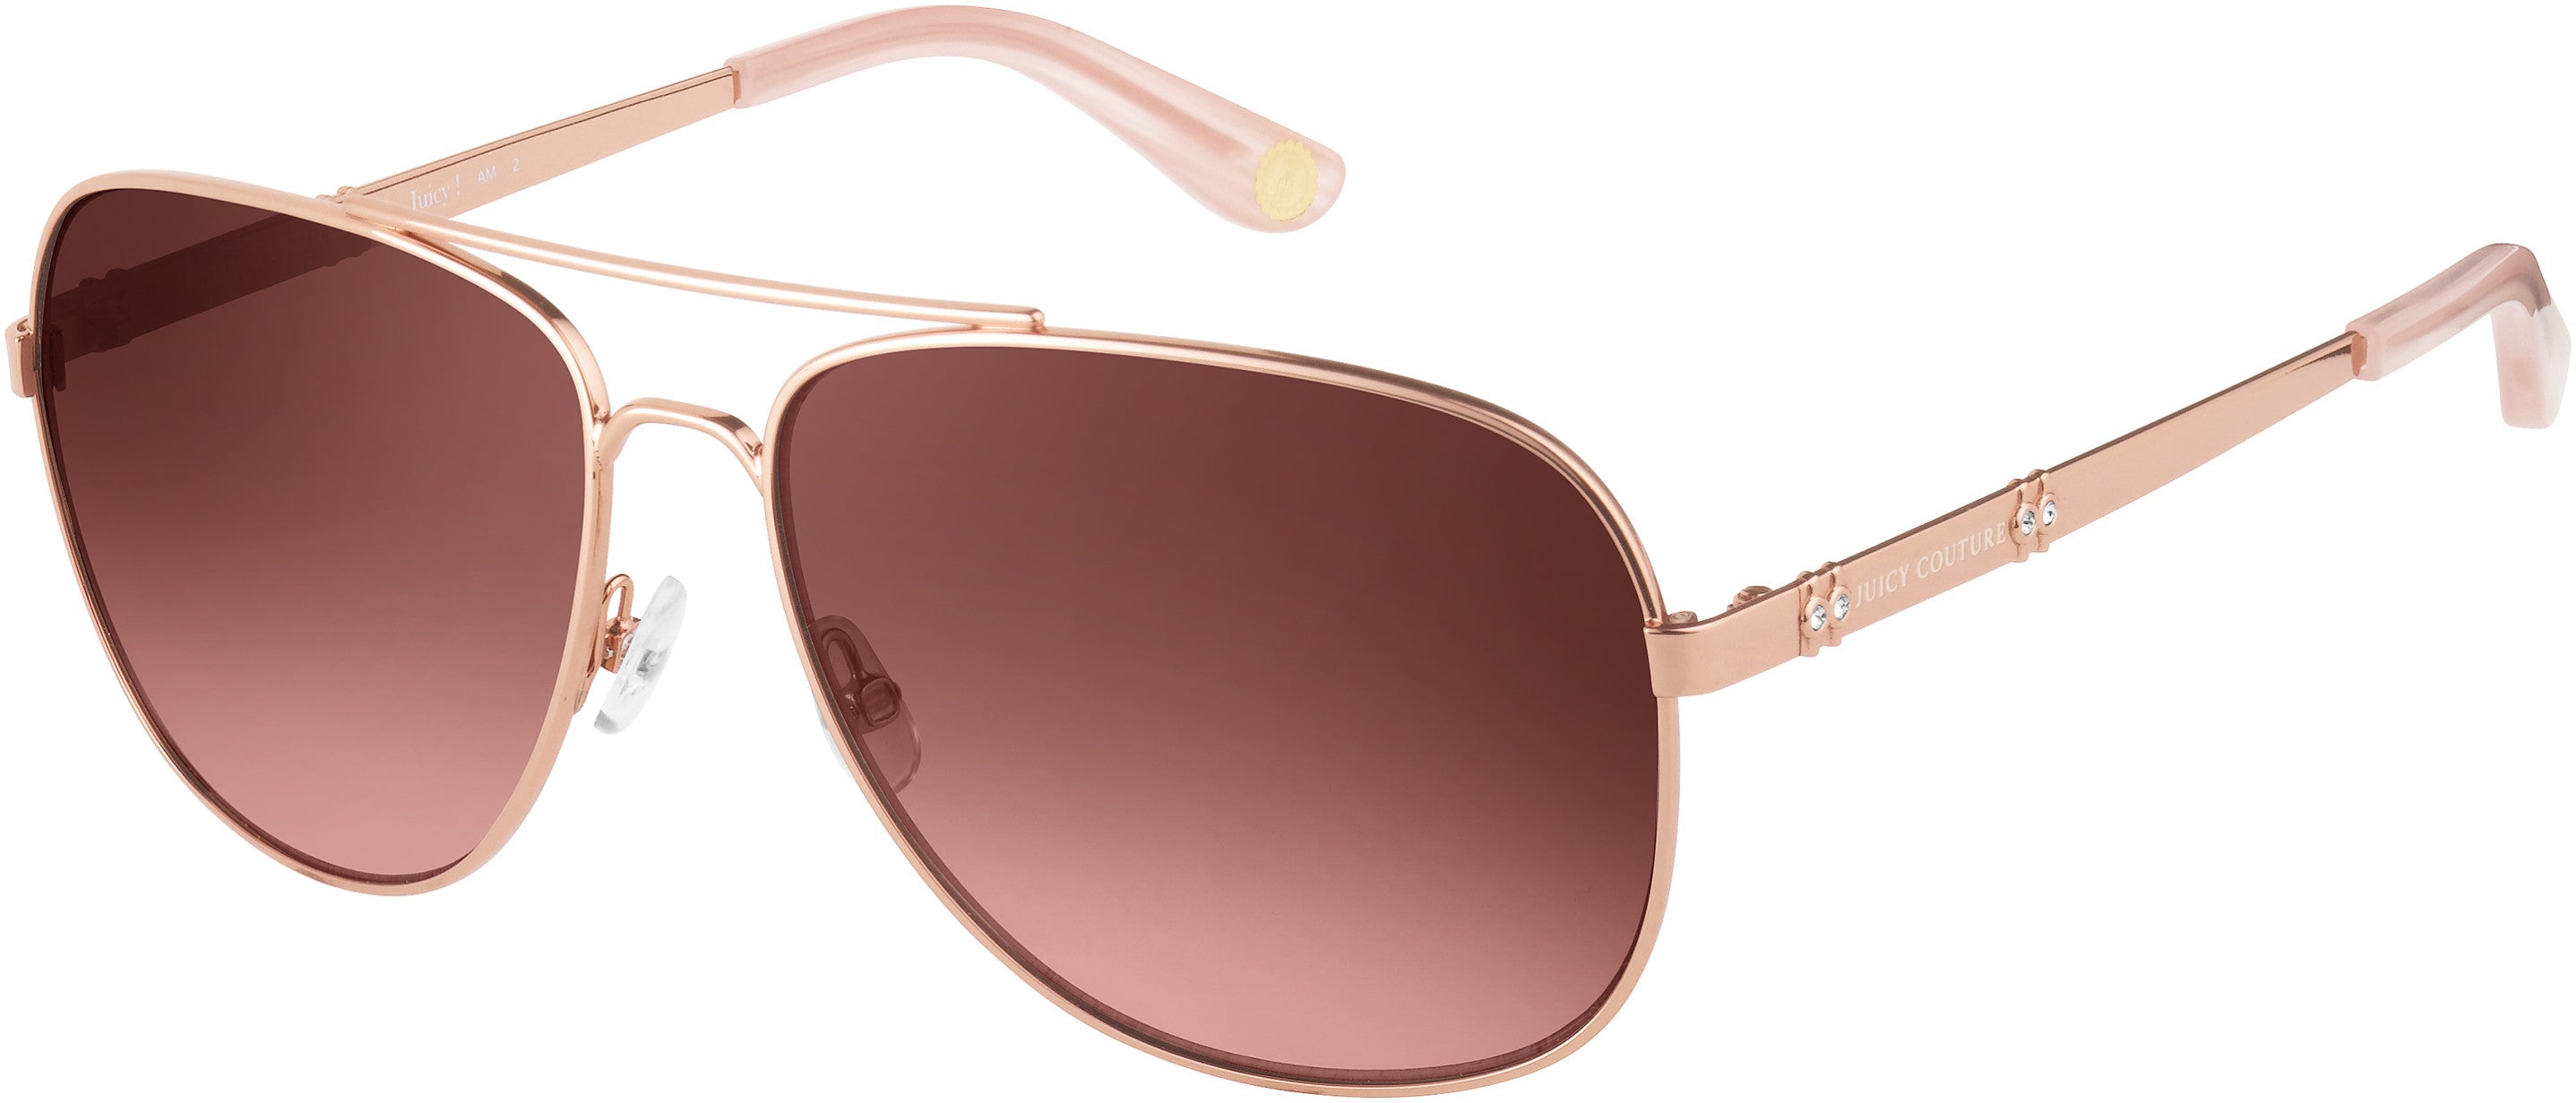 Juicy Couture Juicy 589/S Aviator Sunglasses 0000-0000  Rose Gold (M2 Brown Pink Gradient)